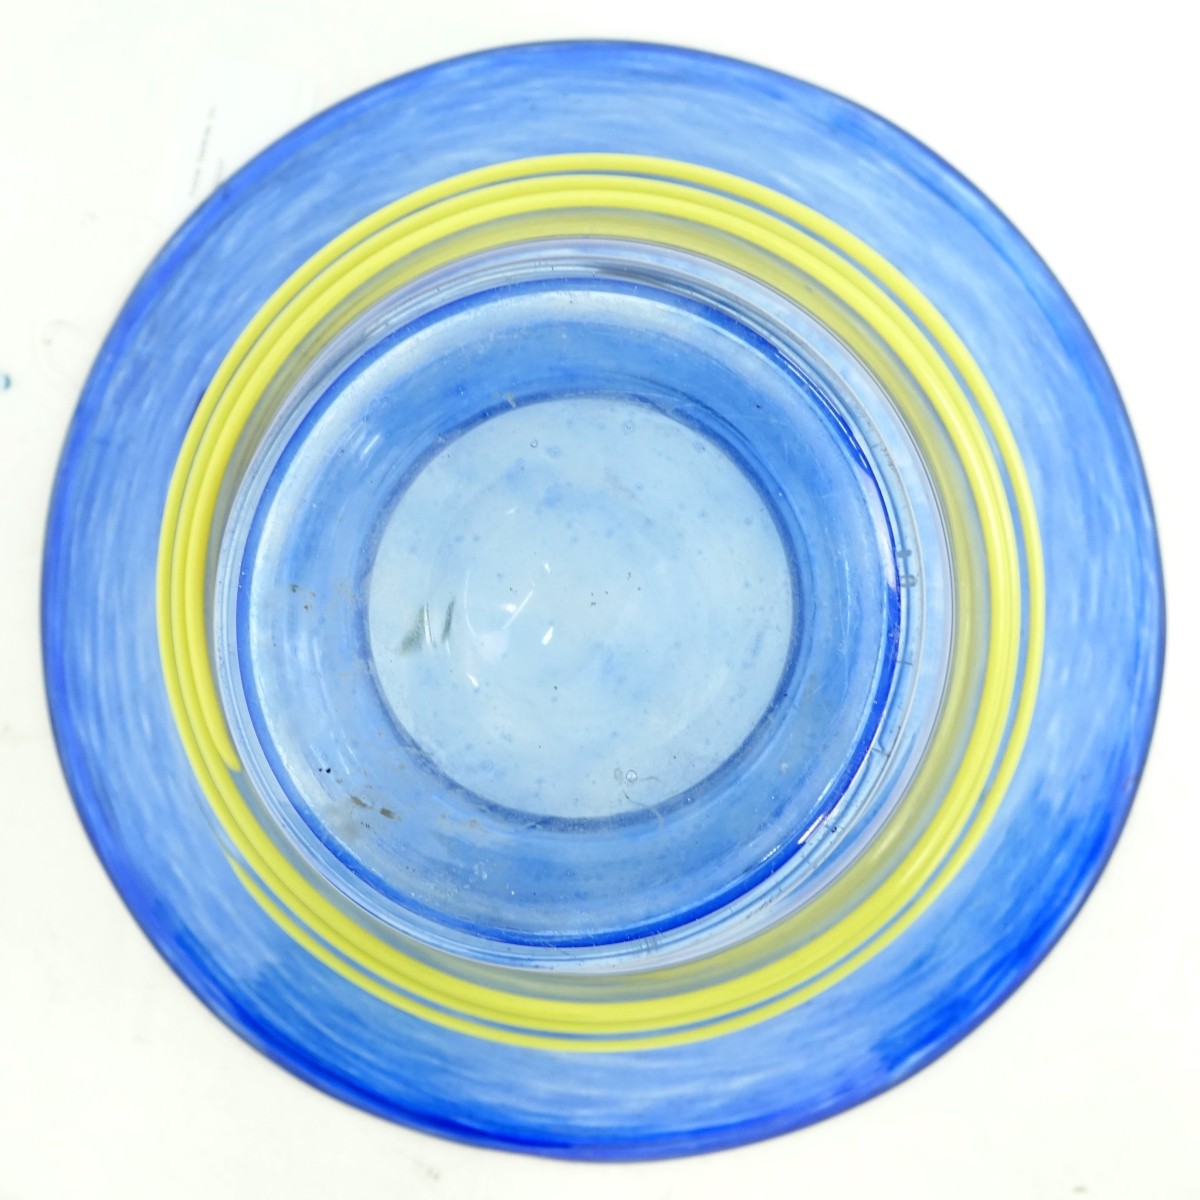 Schneider Art Glass Bowl